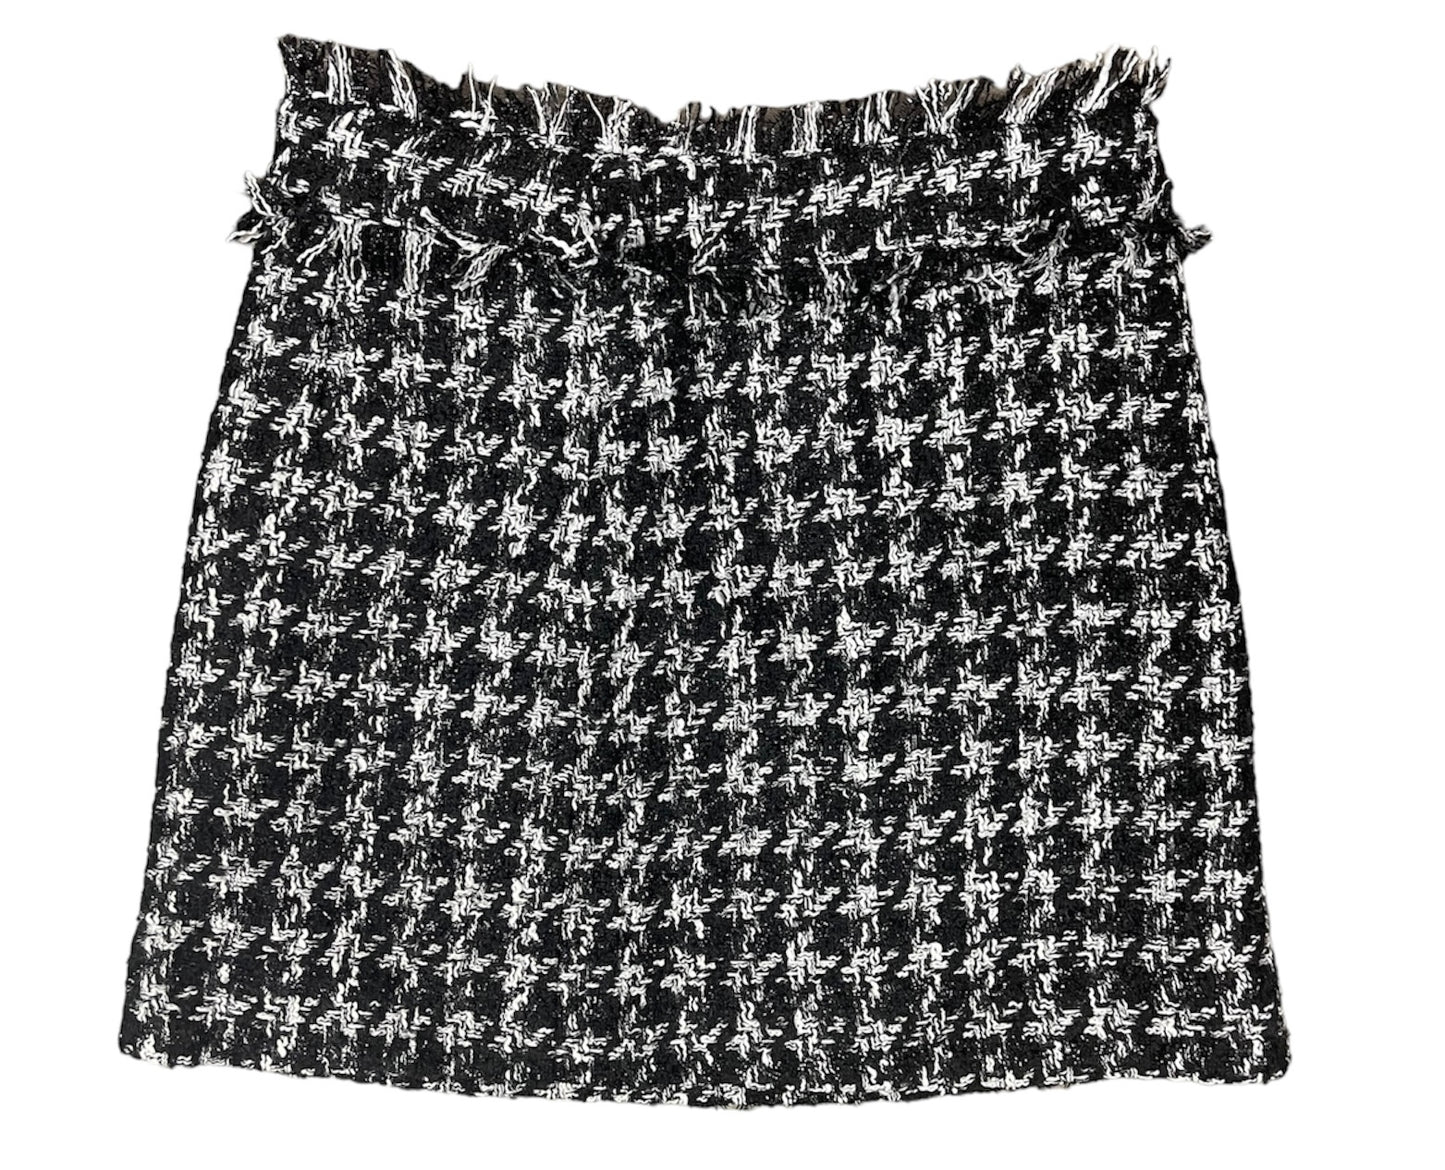 B/W charlottes skirt